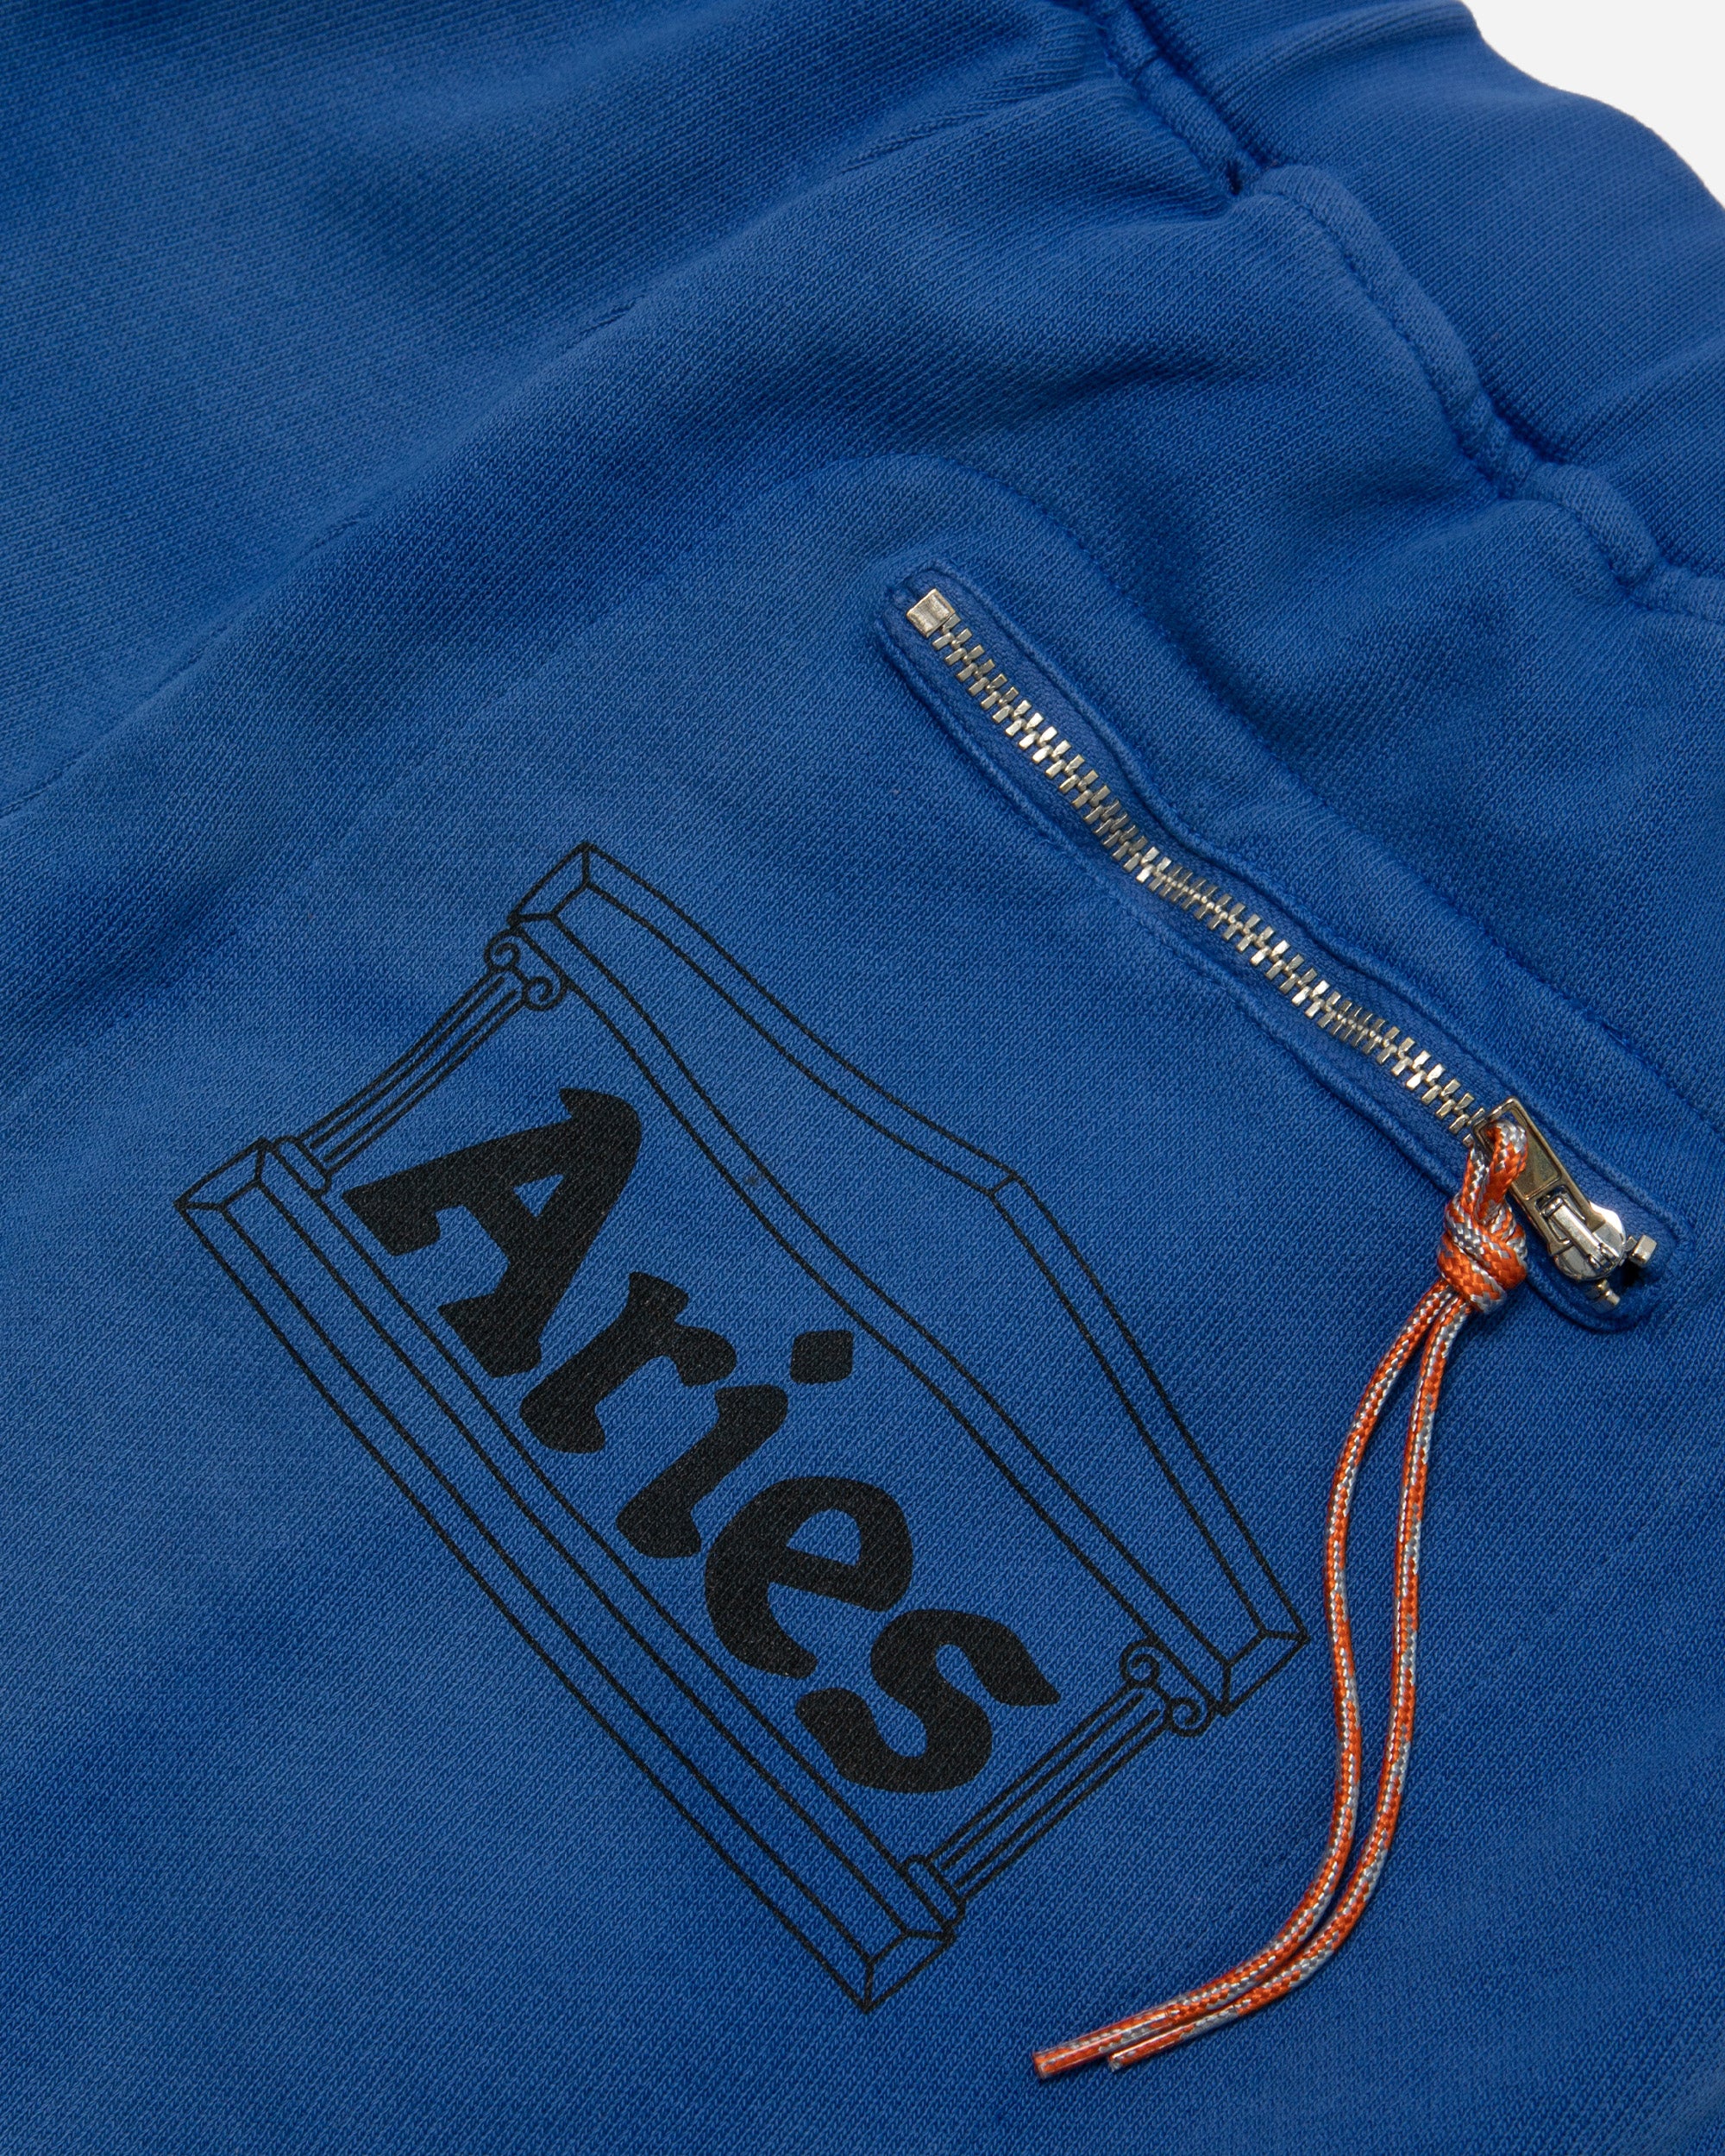 ARIES Sunbleached Premium Sweatpants Blue FTAR32200